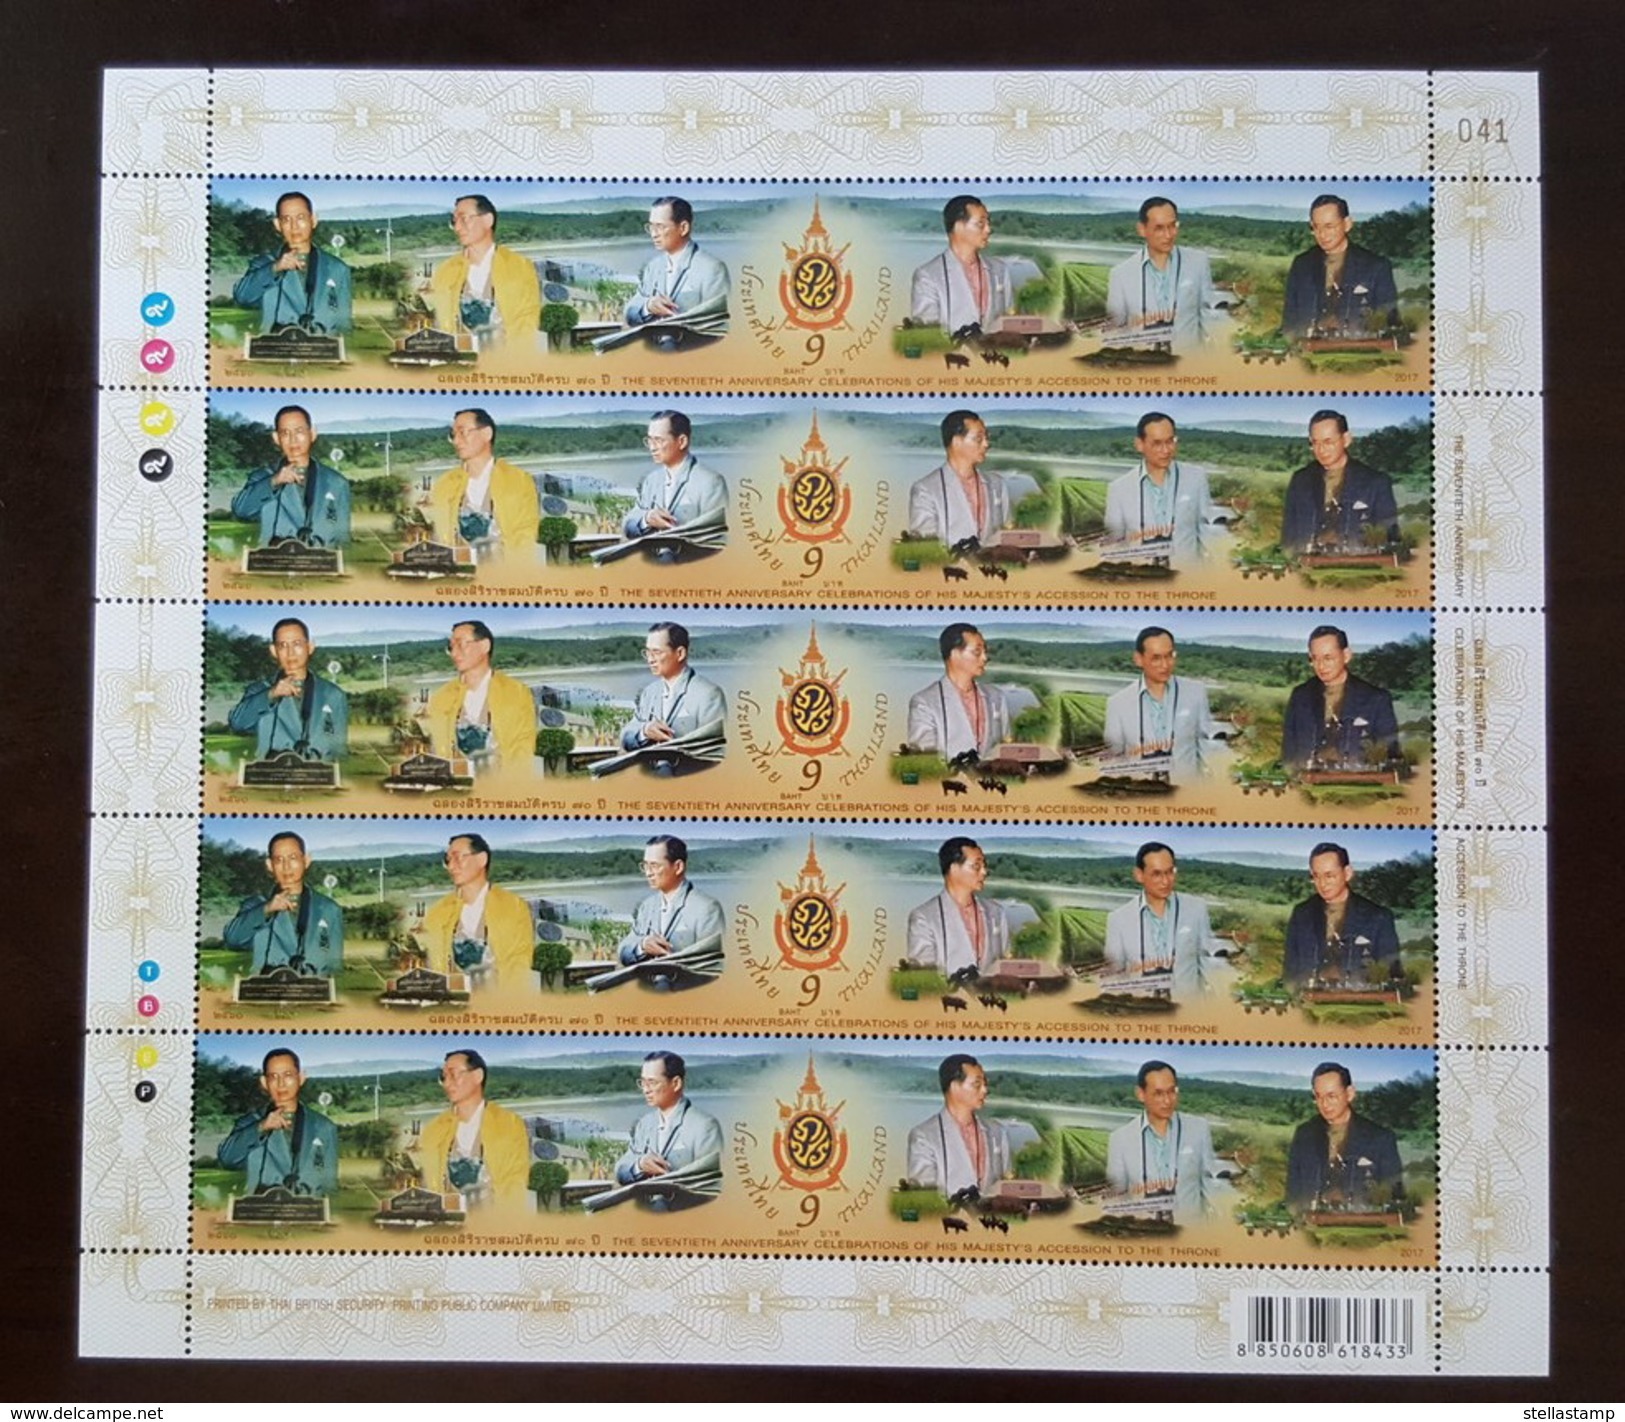 Thailand Stamp FS 2017 70th Ann HM King Bhumibol Accession To The Throne - Thailand